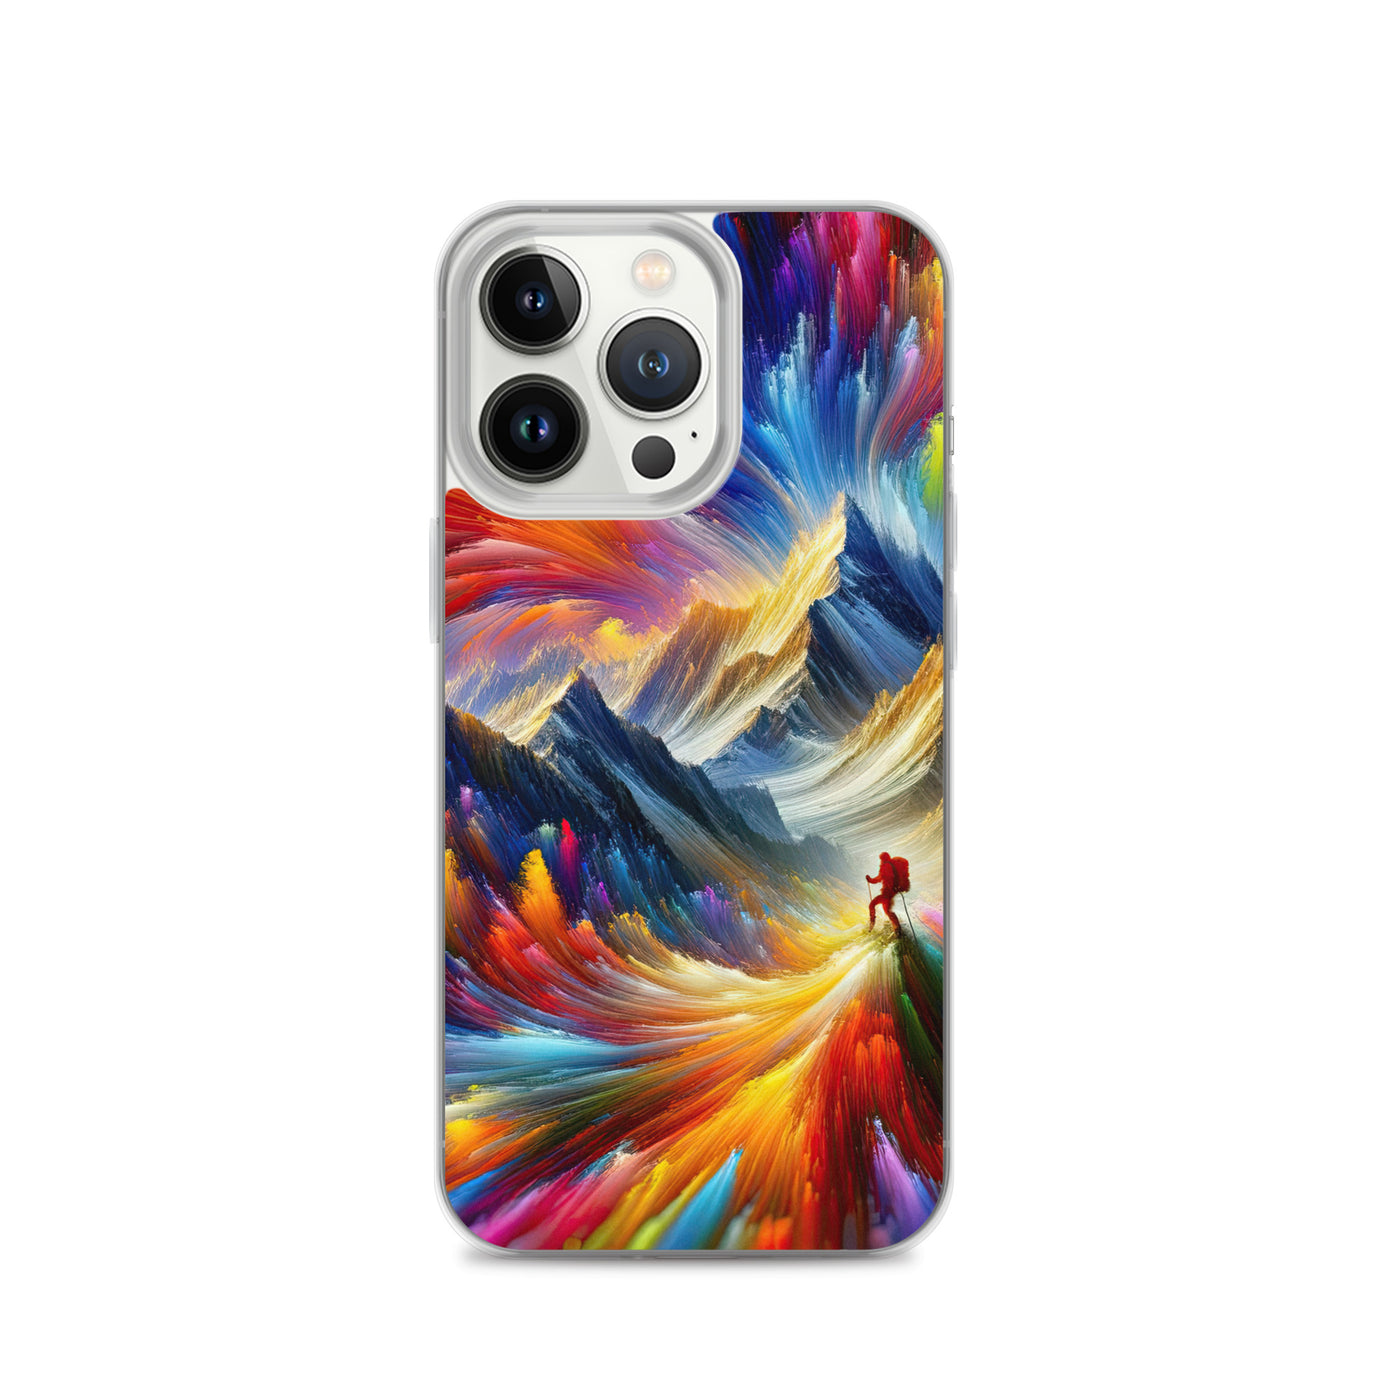 Alpen im Farbsturm mit erleuchtetem Wanderer - Abstrakt - iPhone Schutzhülle (durchsichtig) wandern xxx yyy zzz iPhone 13 Pro